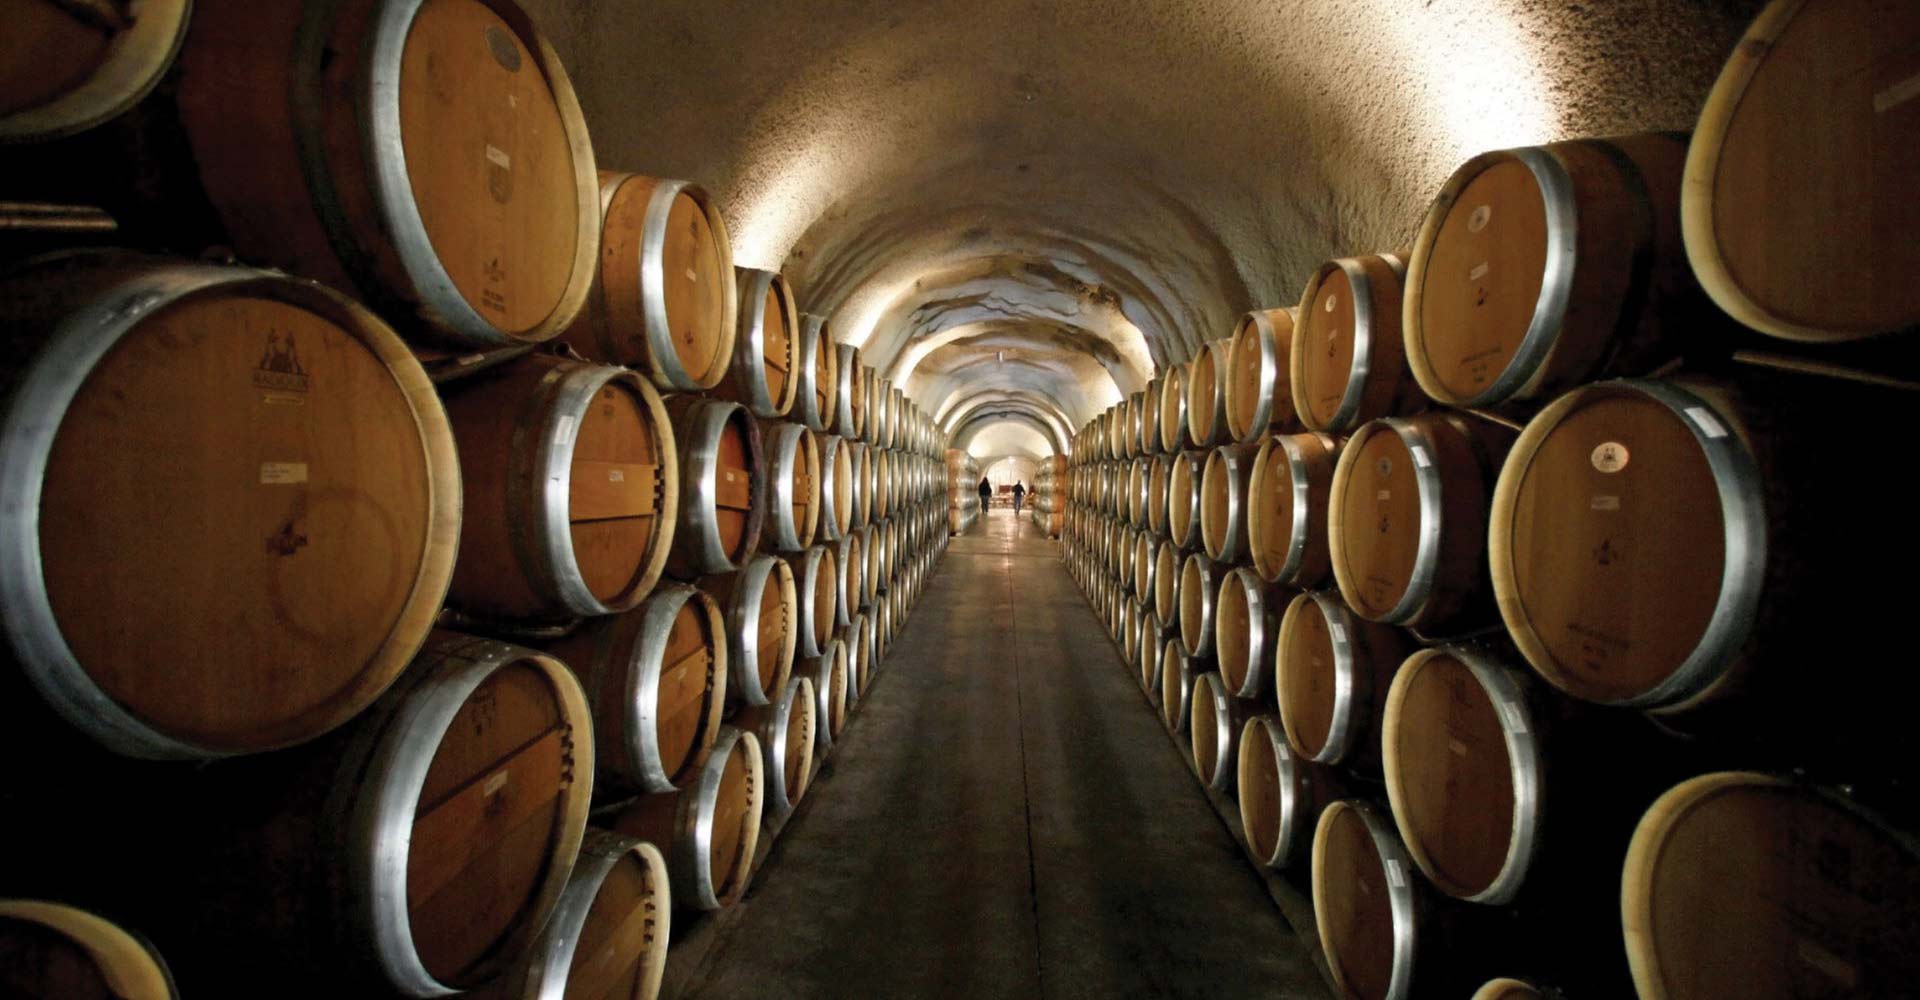 Stacks of wine barrels in a vineyard cellar.